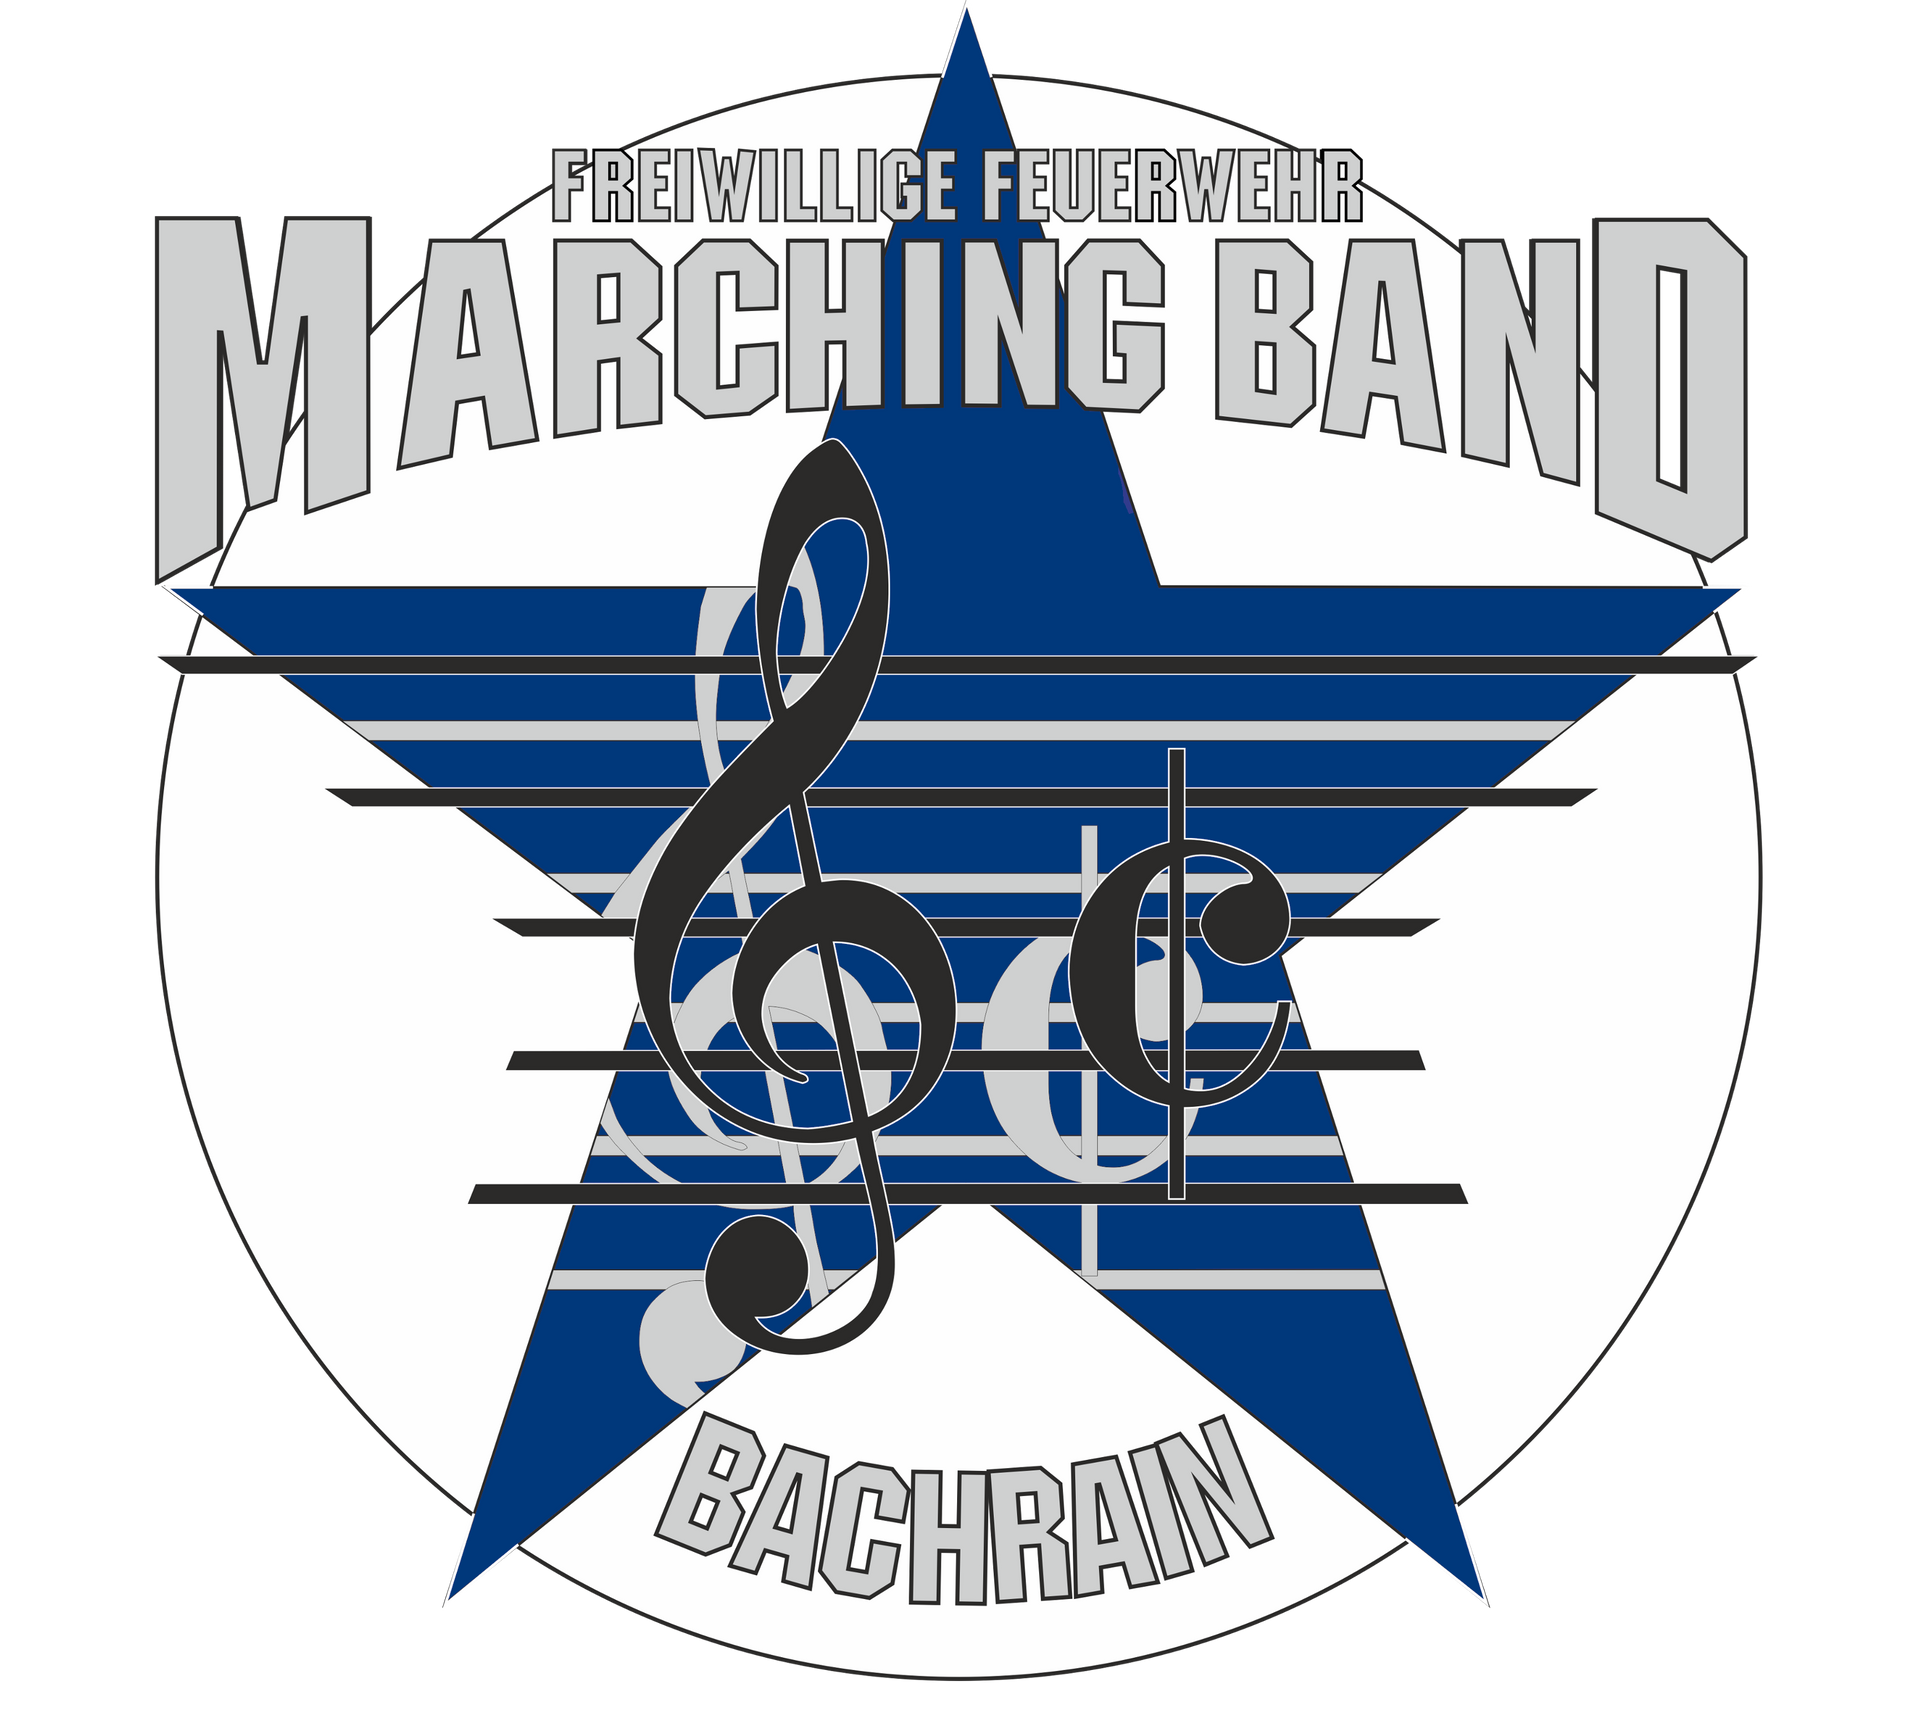 (c) Marchingband-bachrain.de